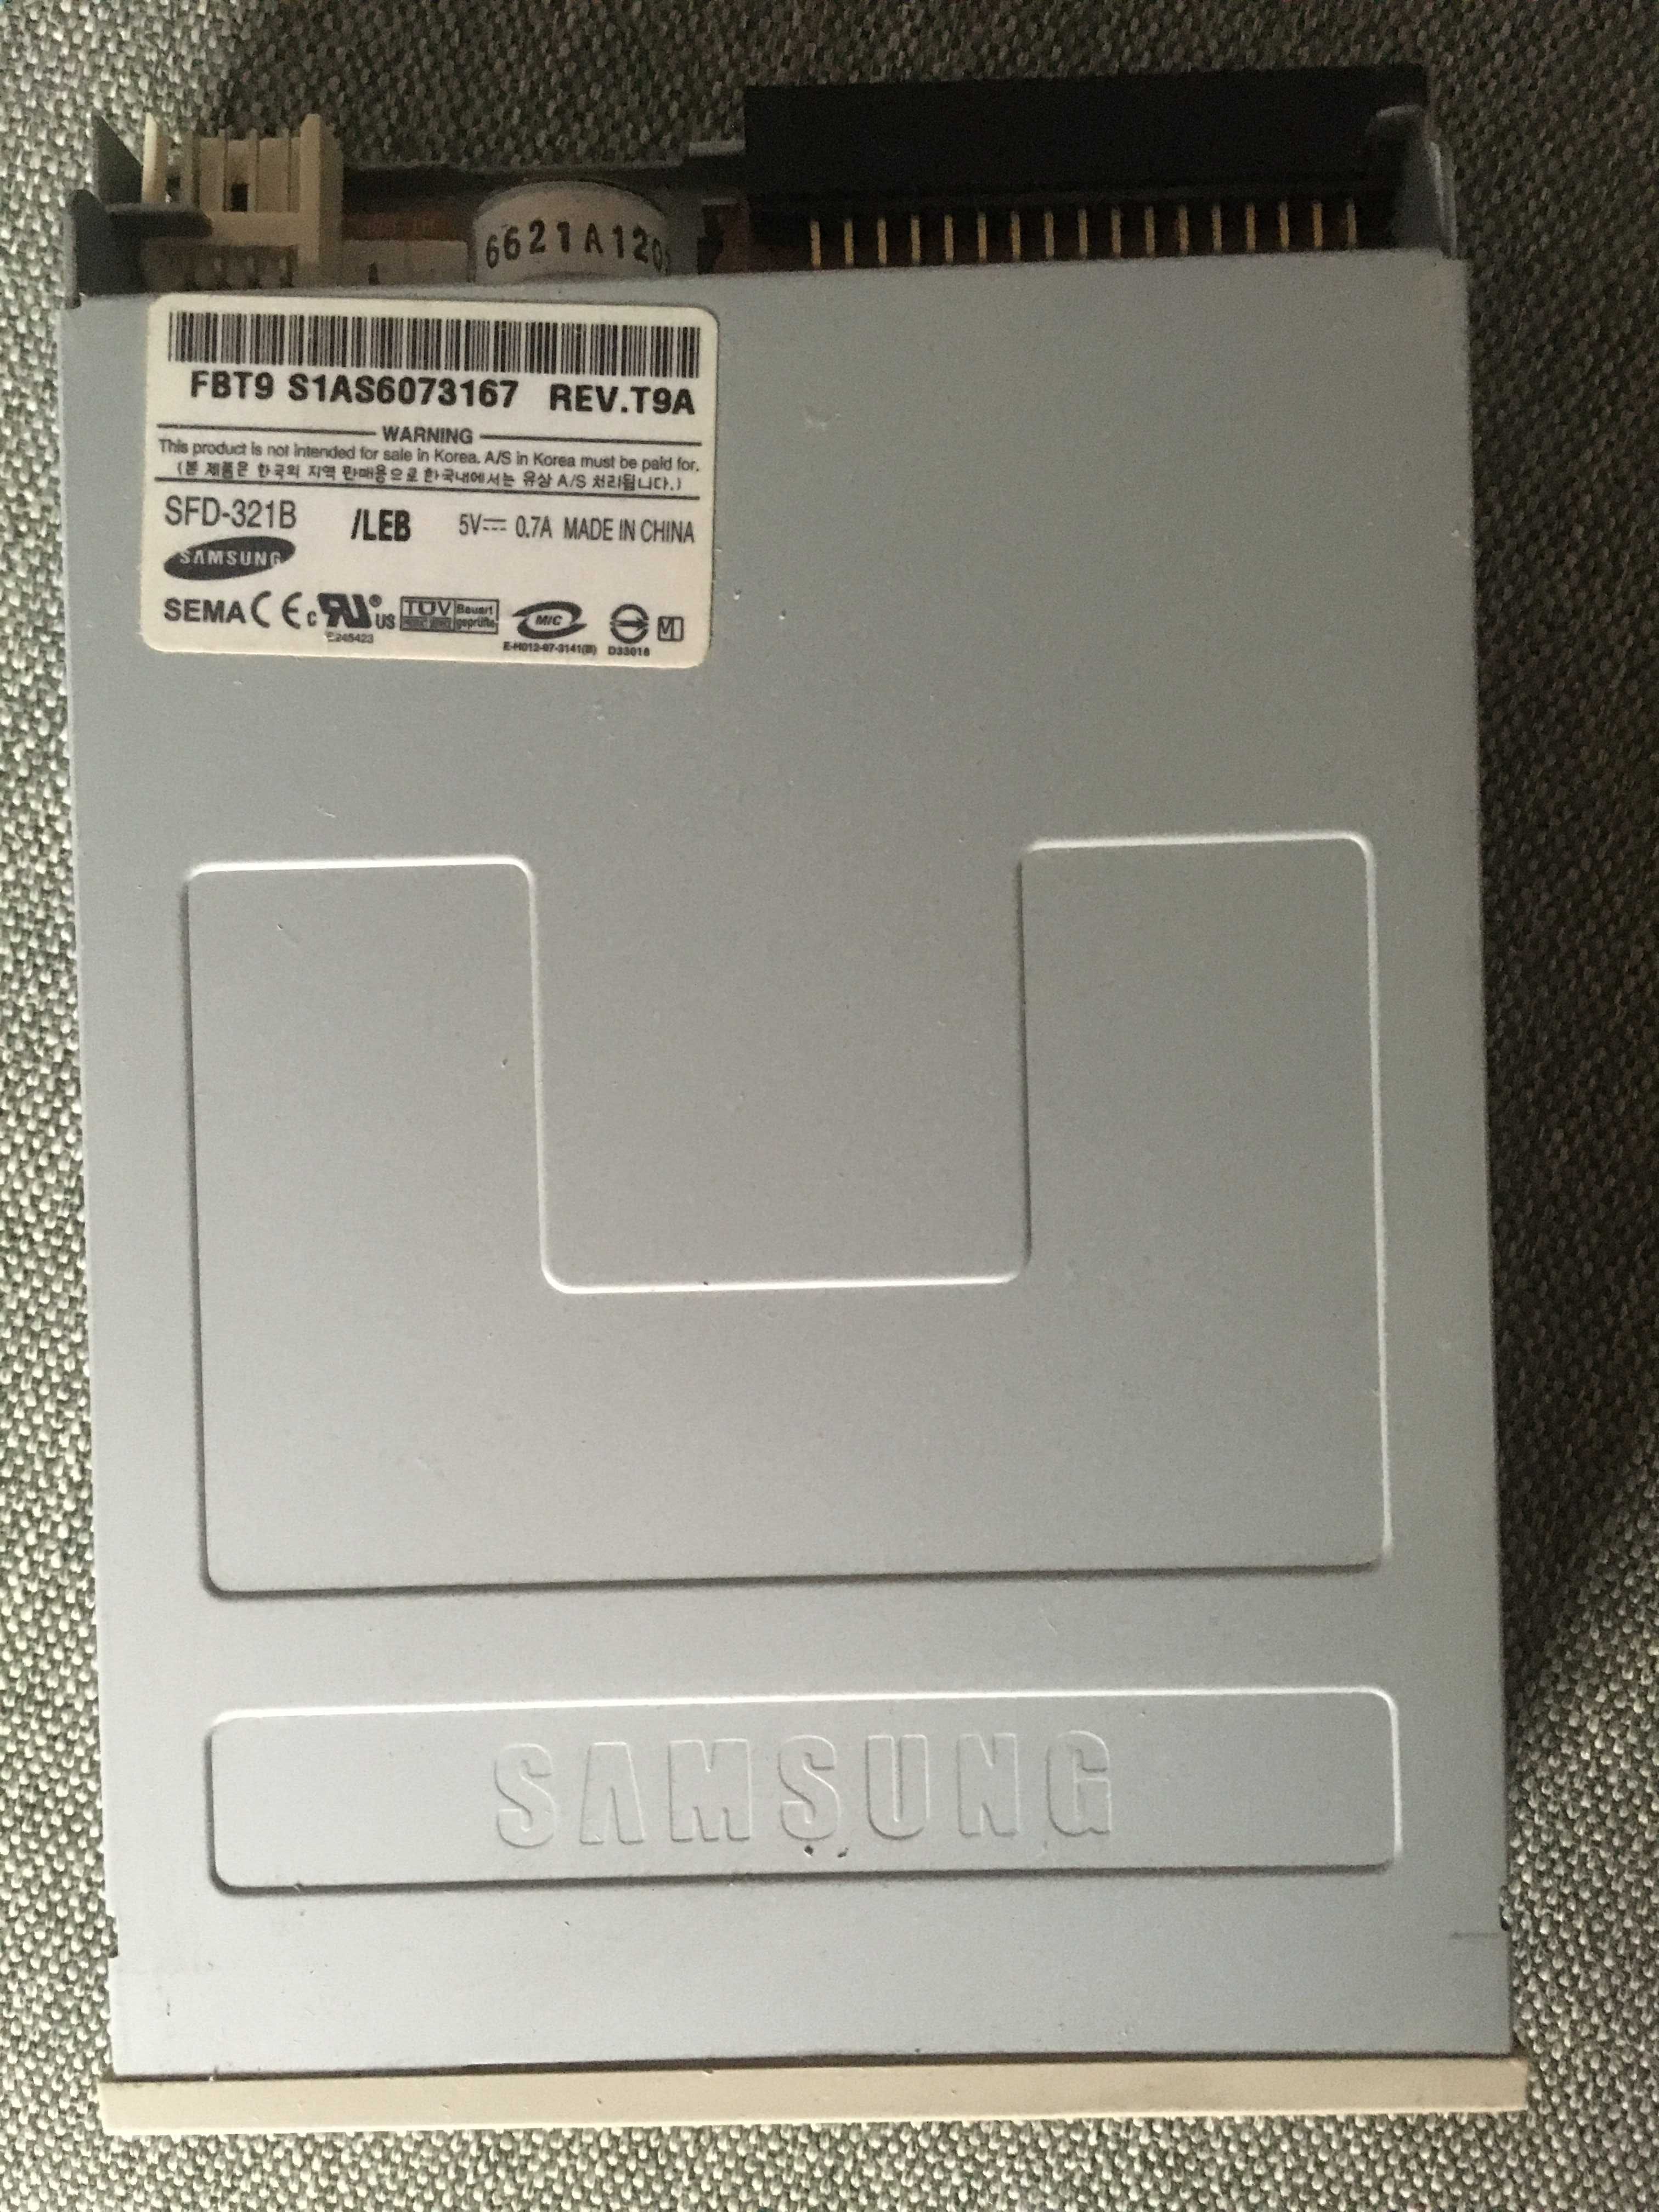 Продам Floppy Drive Samsung SFD-321B